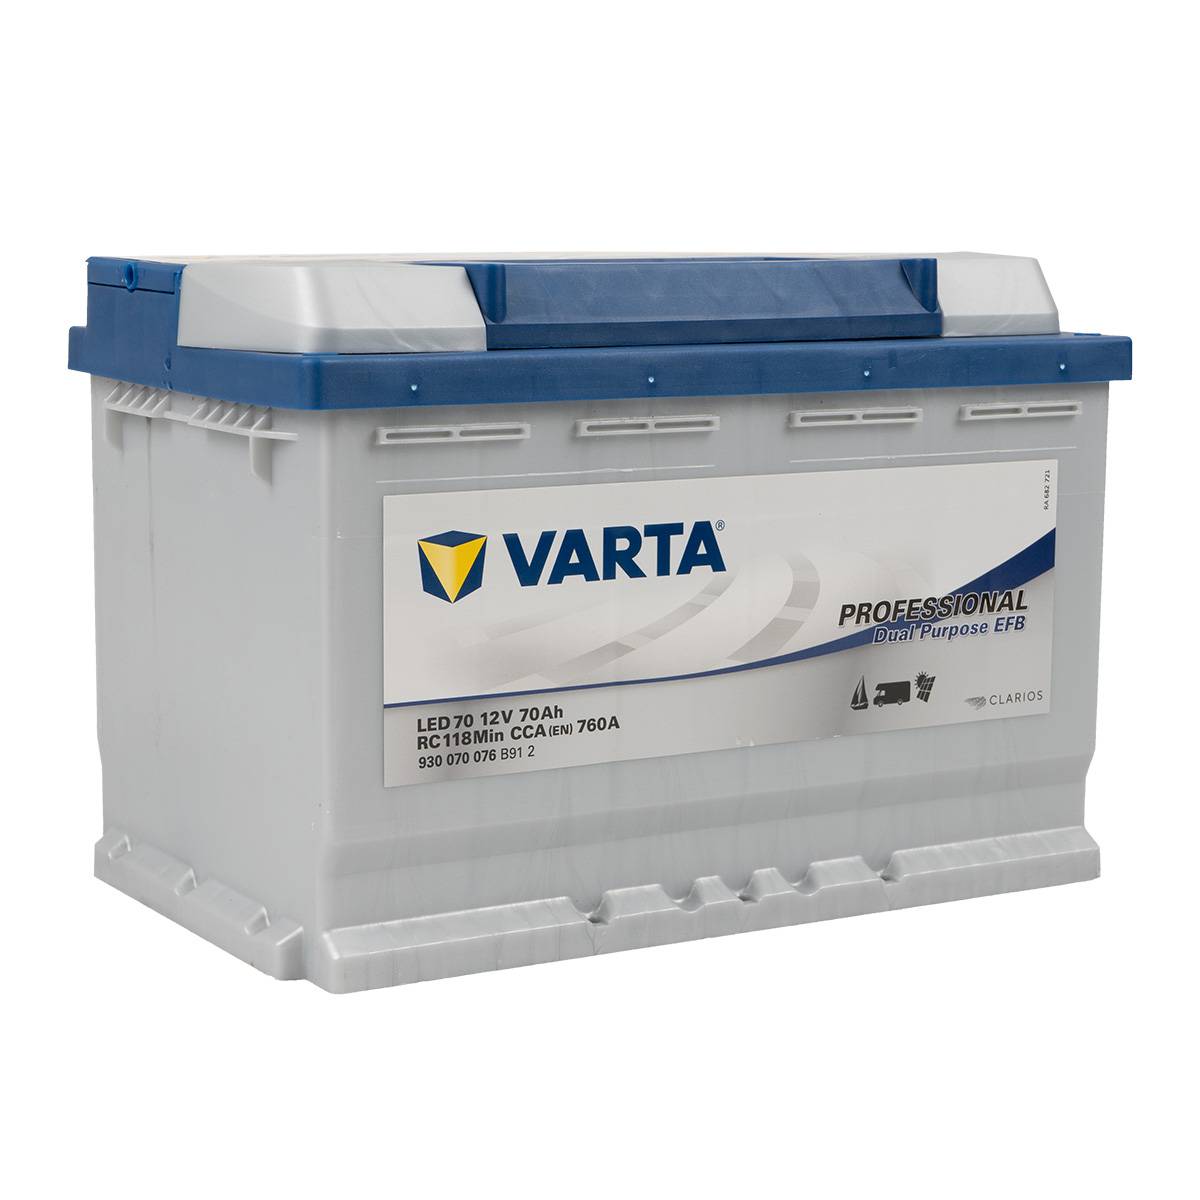 Varta LED70 Professional EFB 12V 70Ah 760A 930 070 076, Supply batteries, Motorhomes & RV, Batteries by application